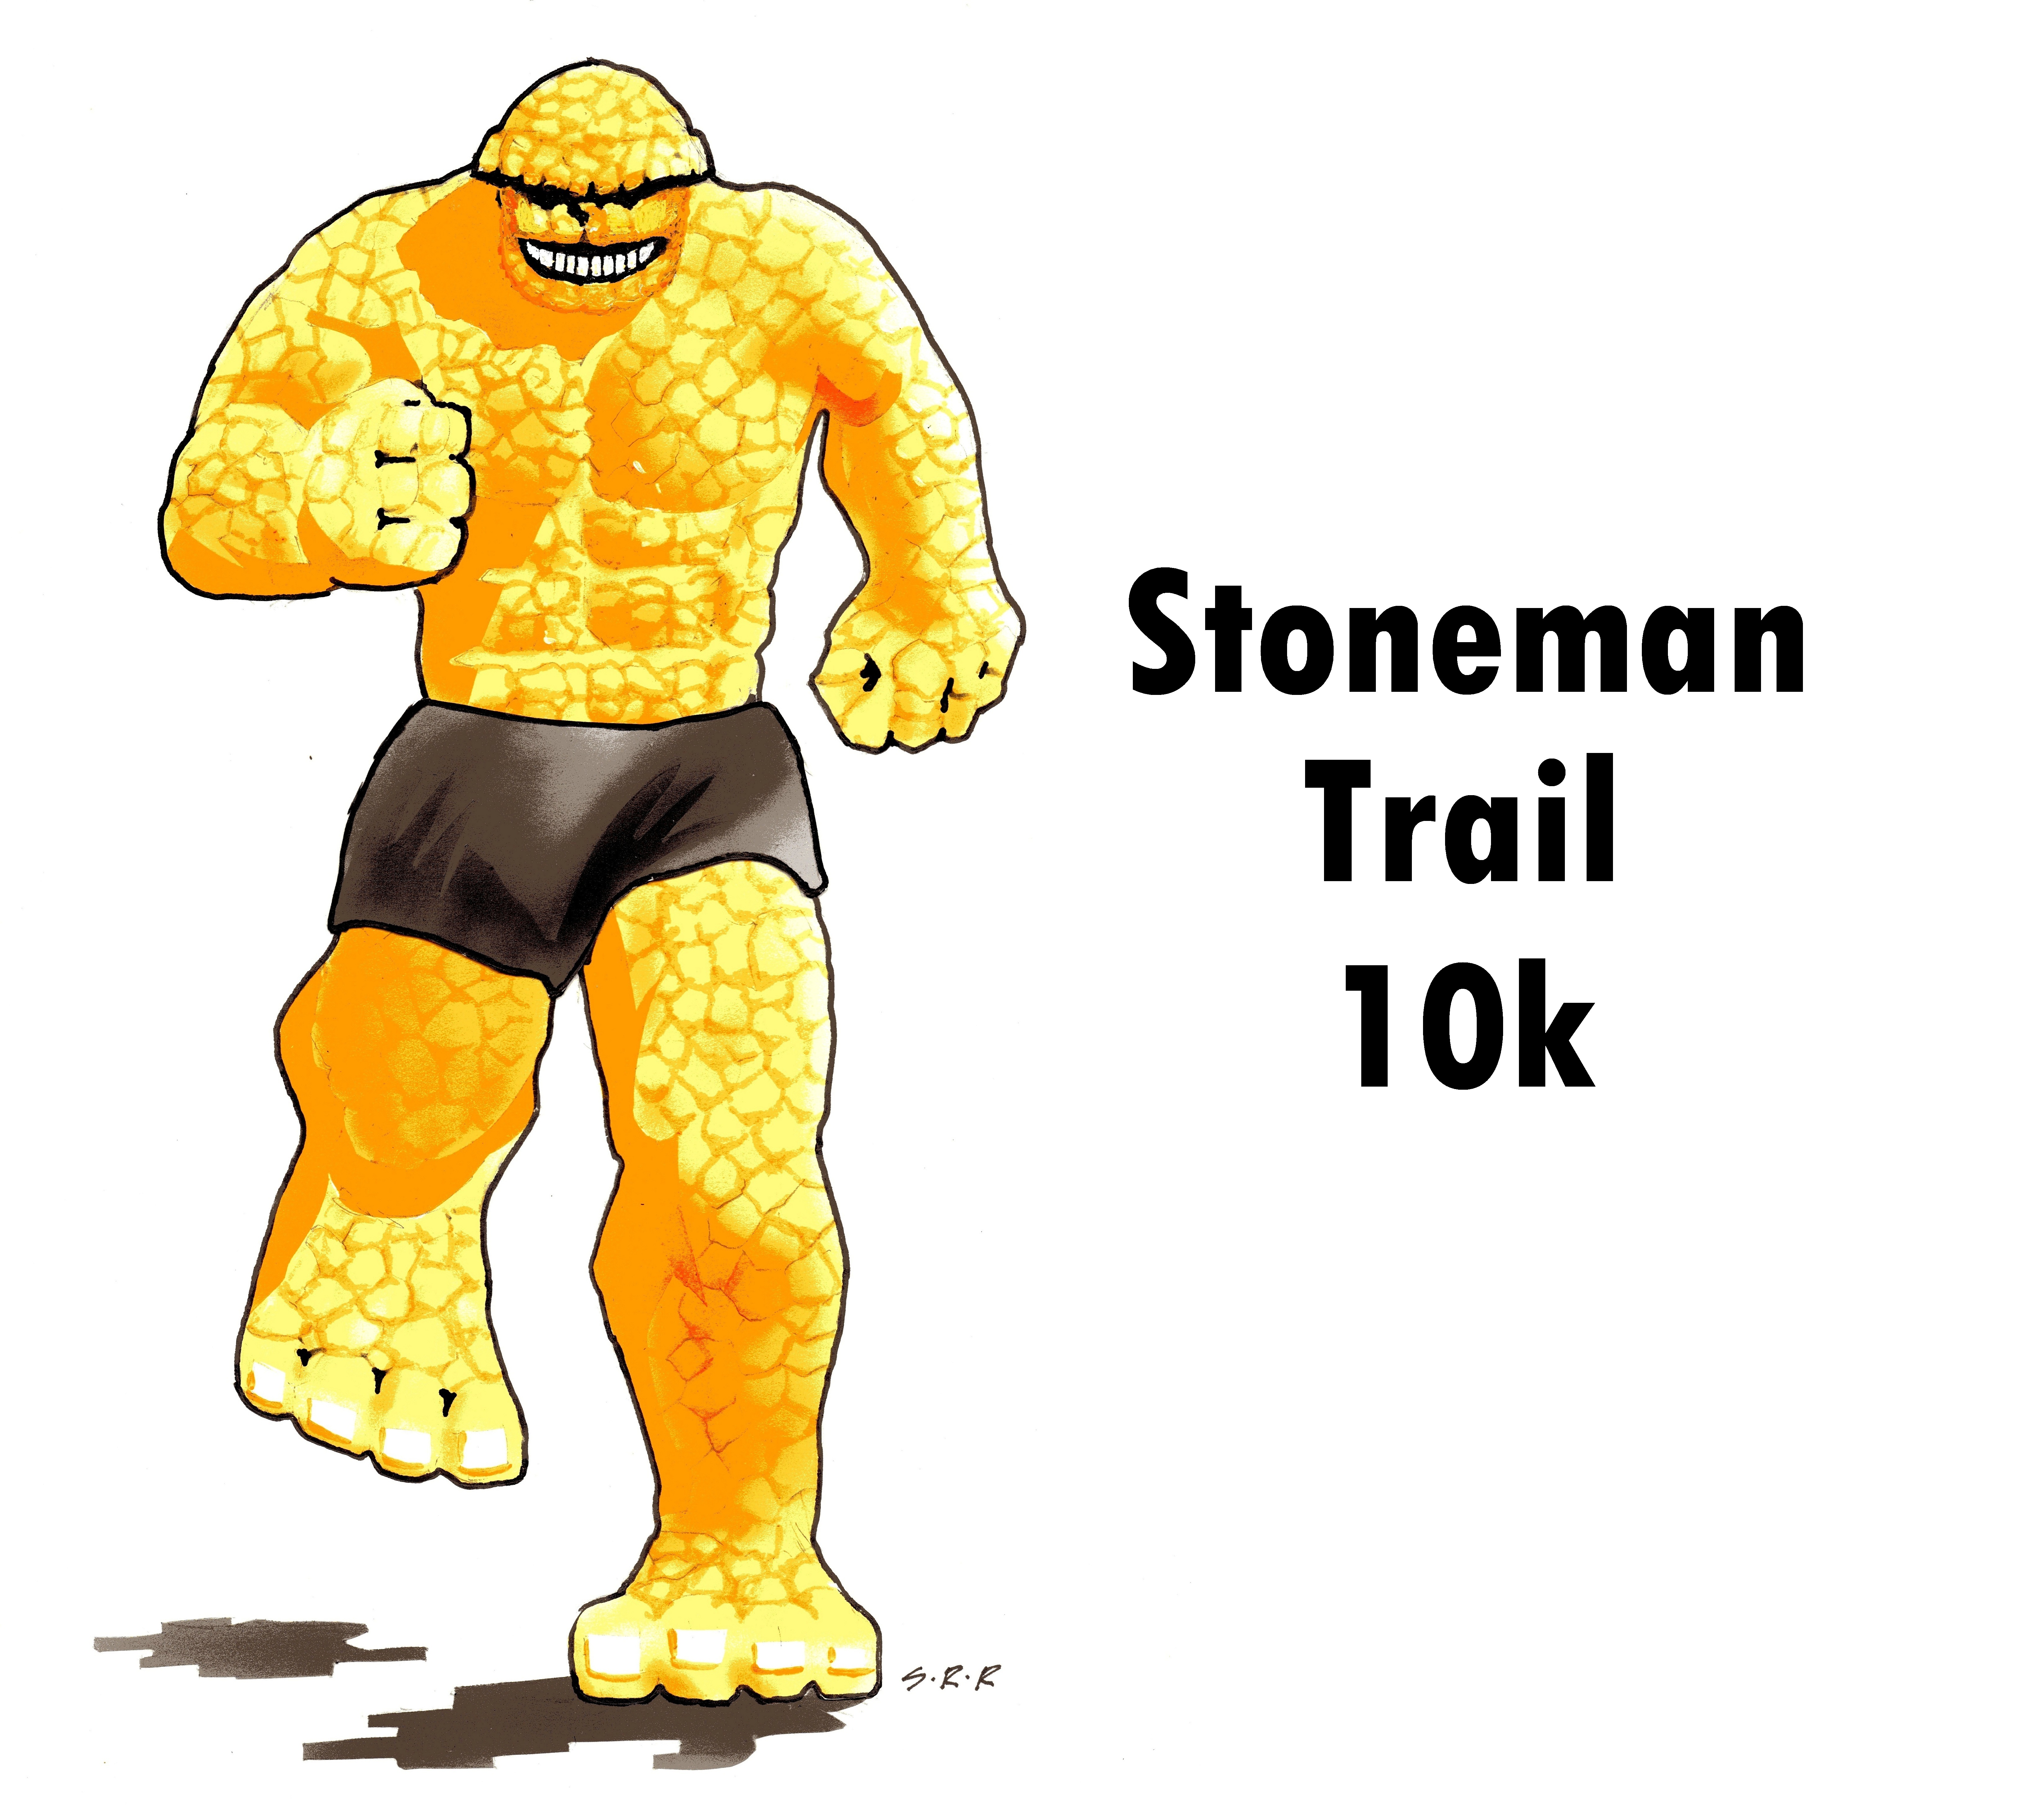 Stoneman Trail 10k logo